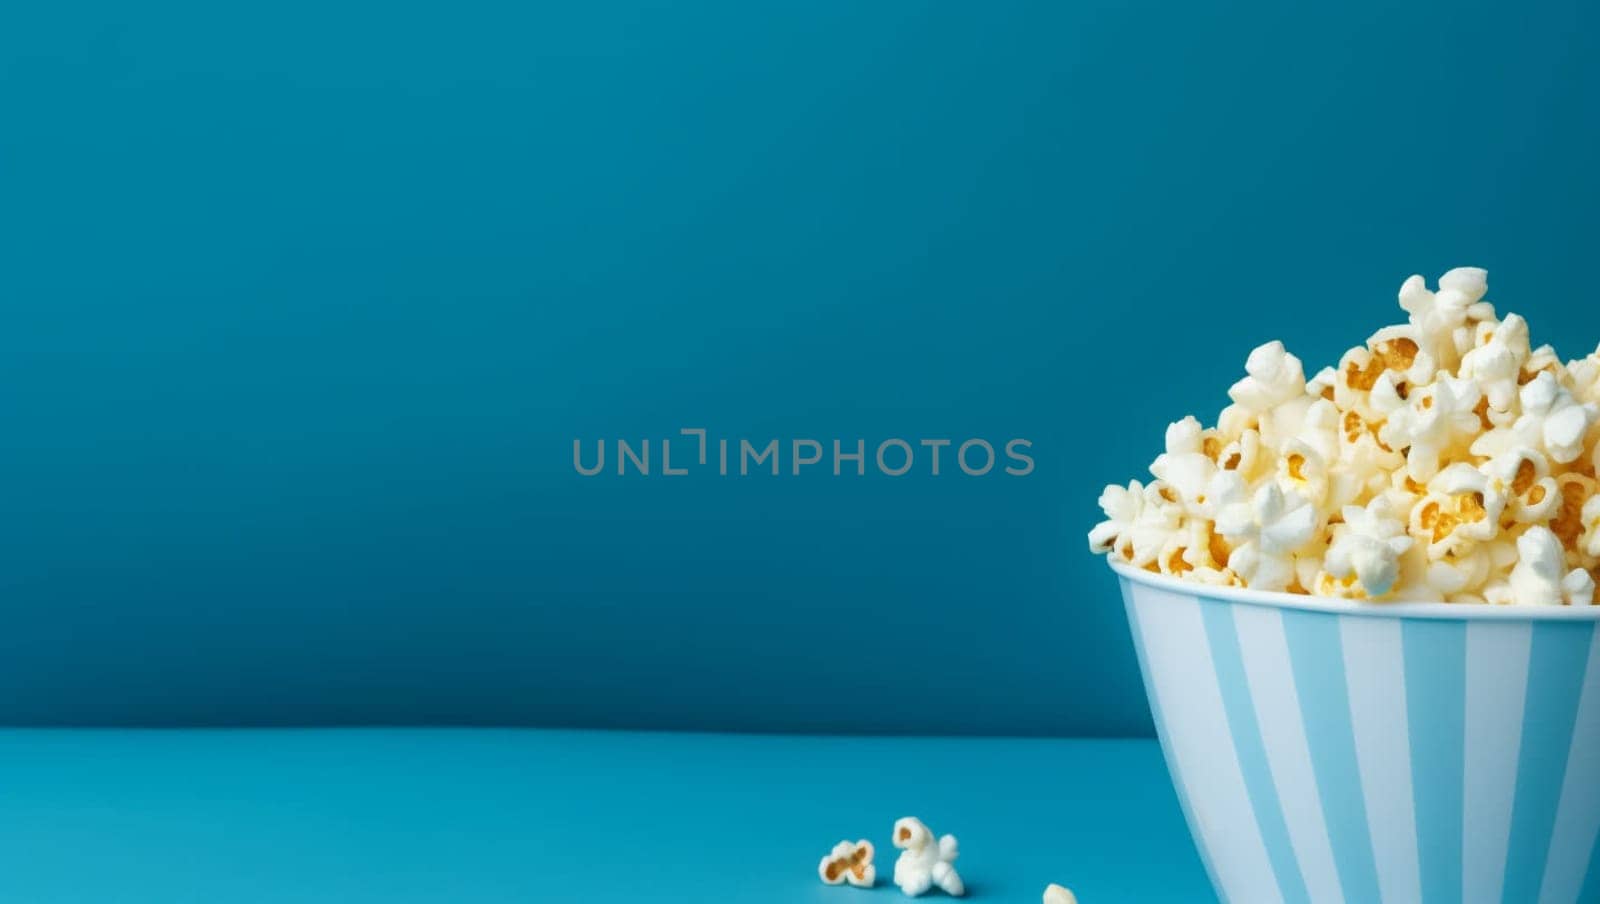 Popcorn on a blue background. High quality photo